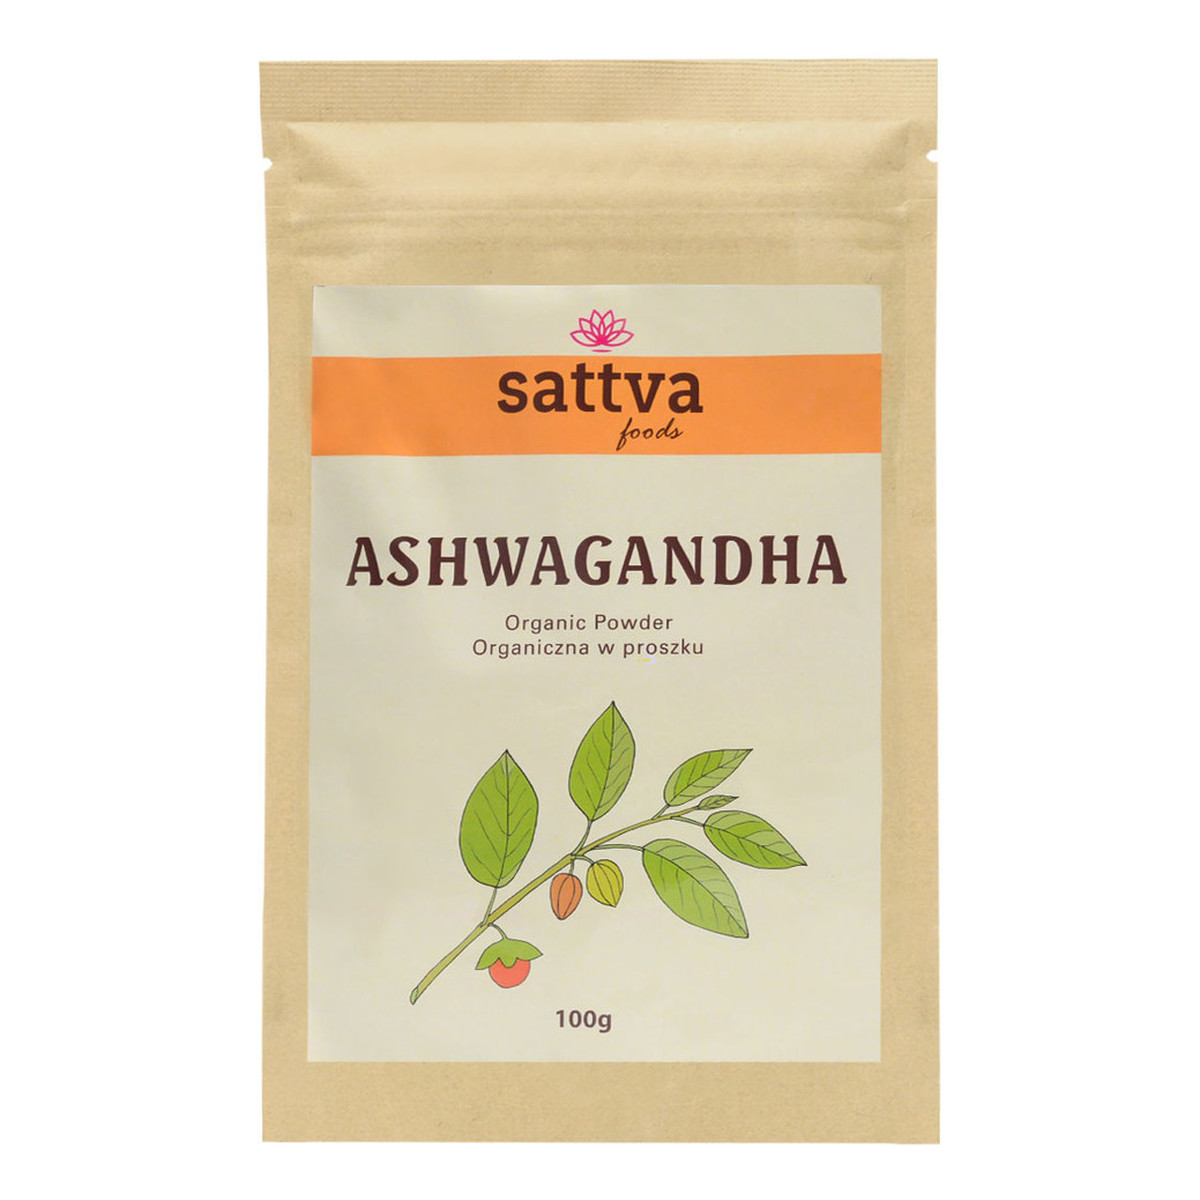 Sattva Foods Organiczna Ashwagandha w proszku 100g